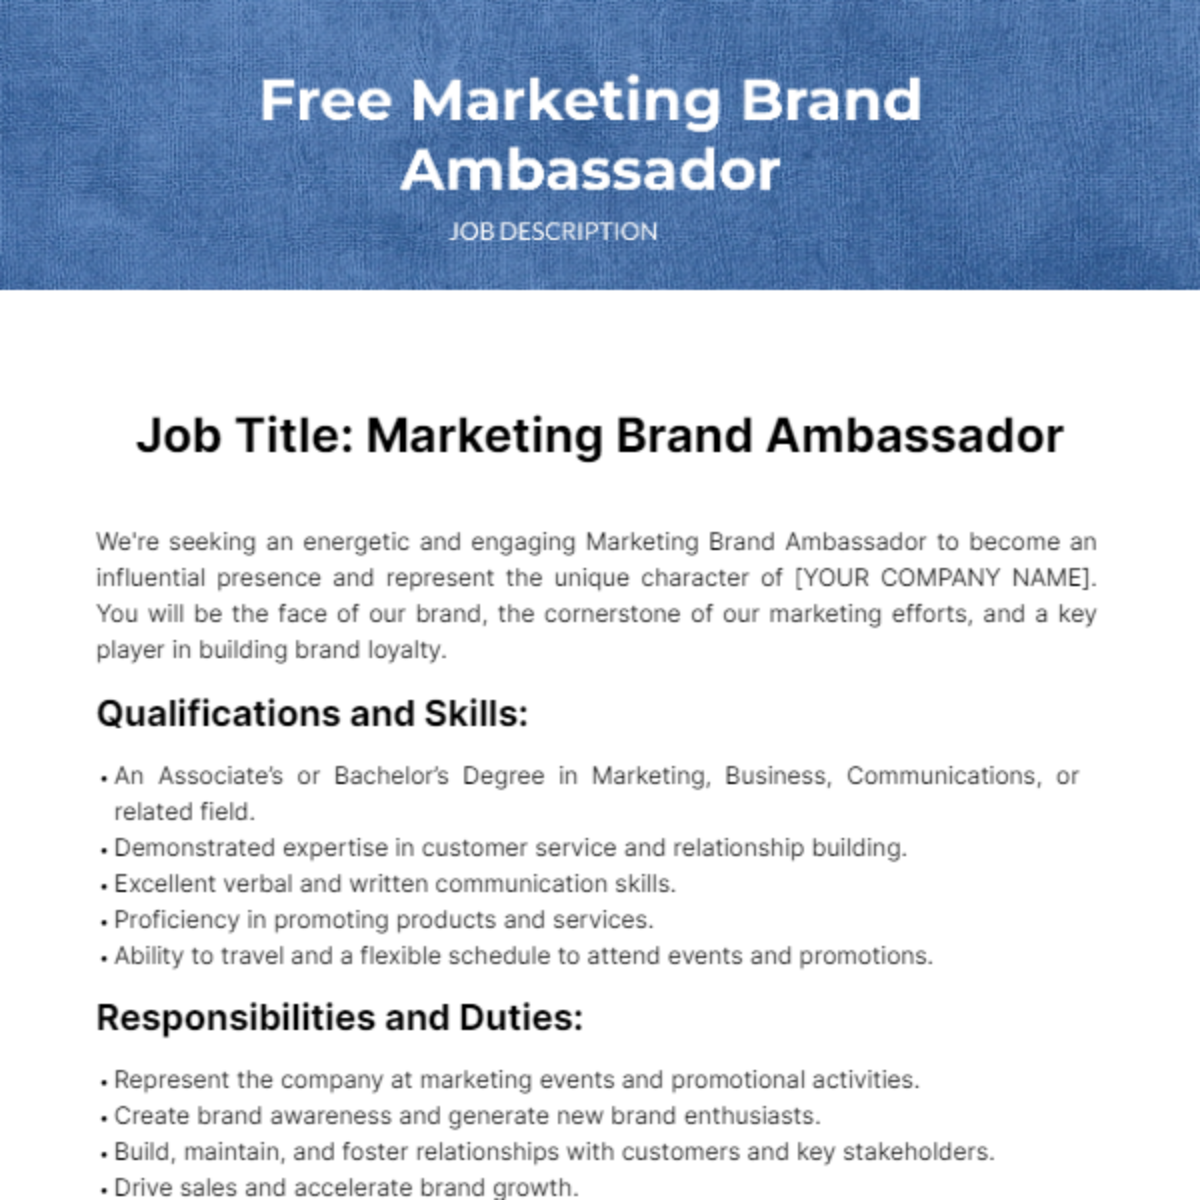 Free Marketing Brand Ambassador Job Description Template